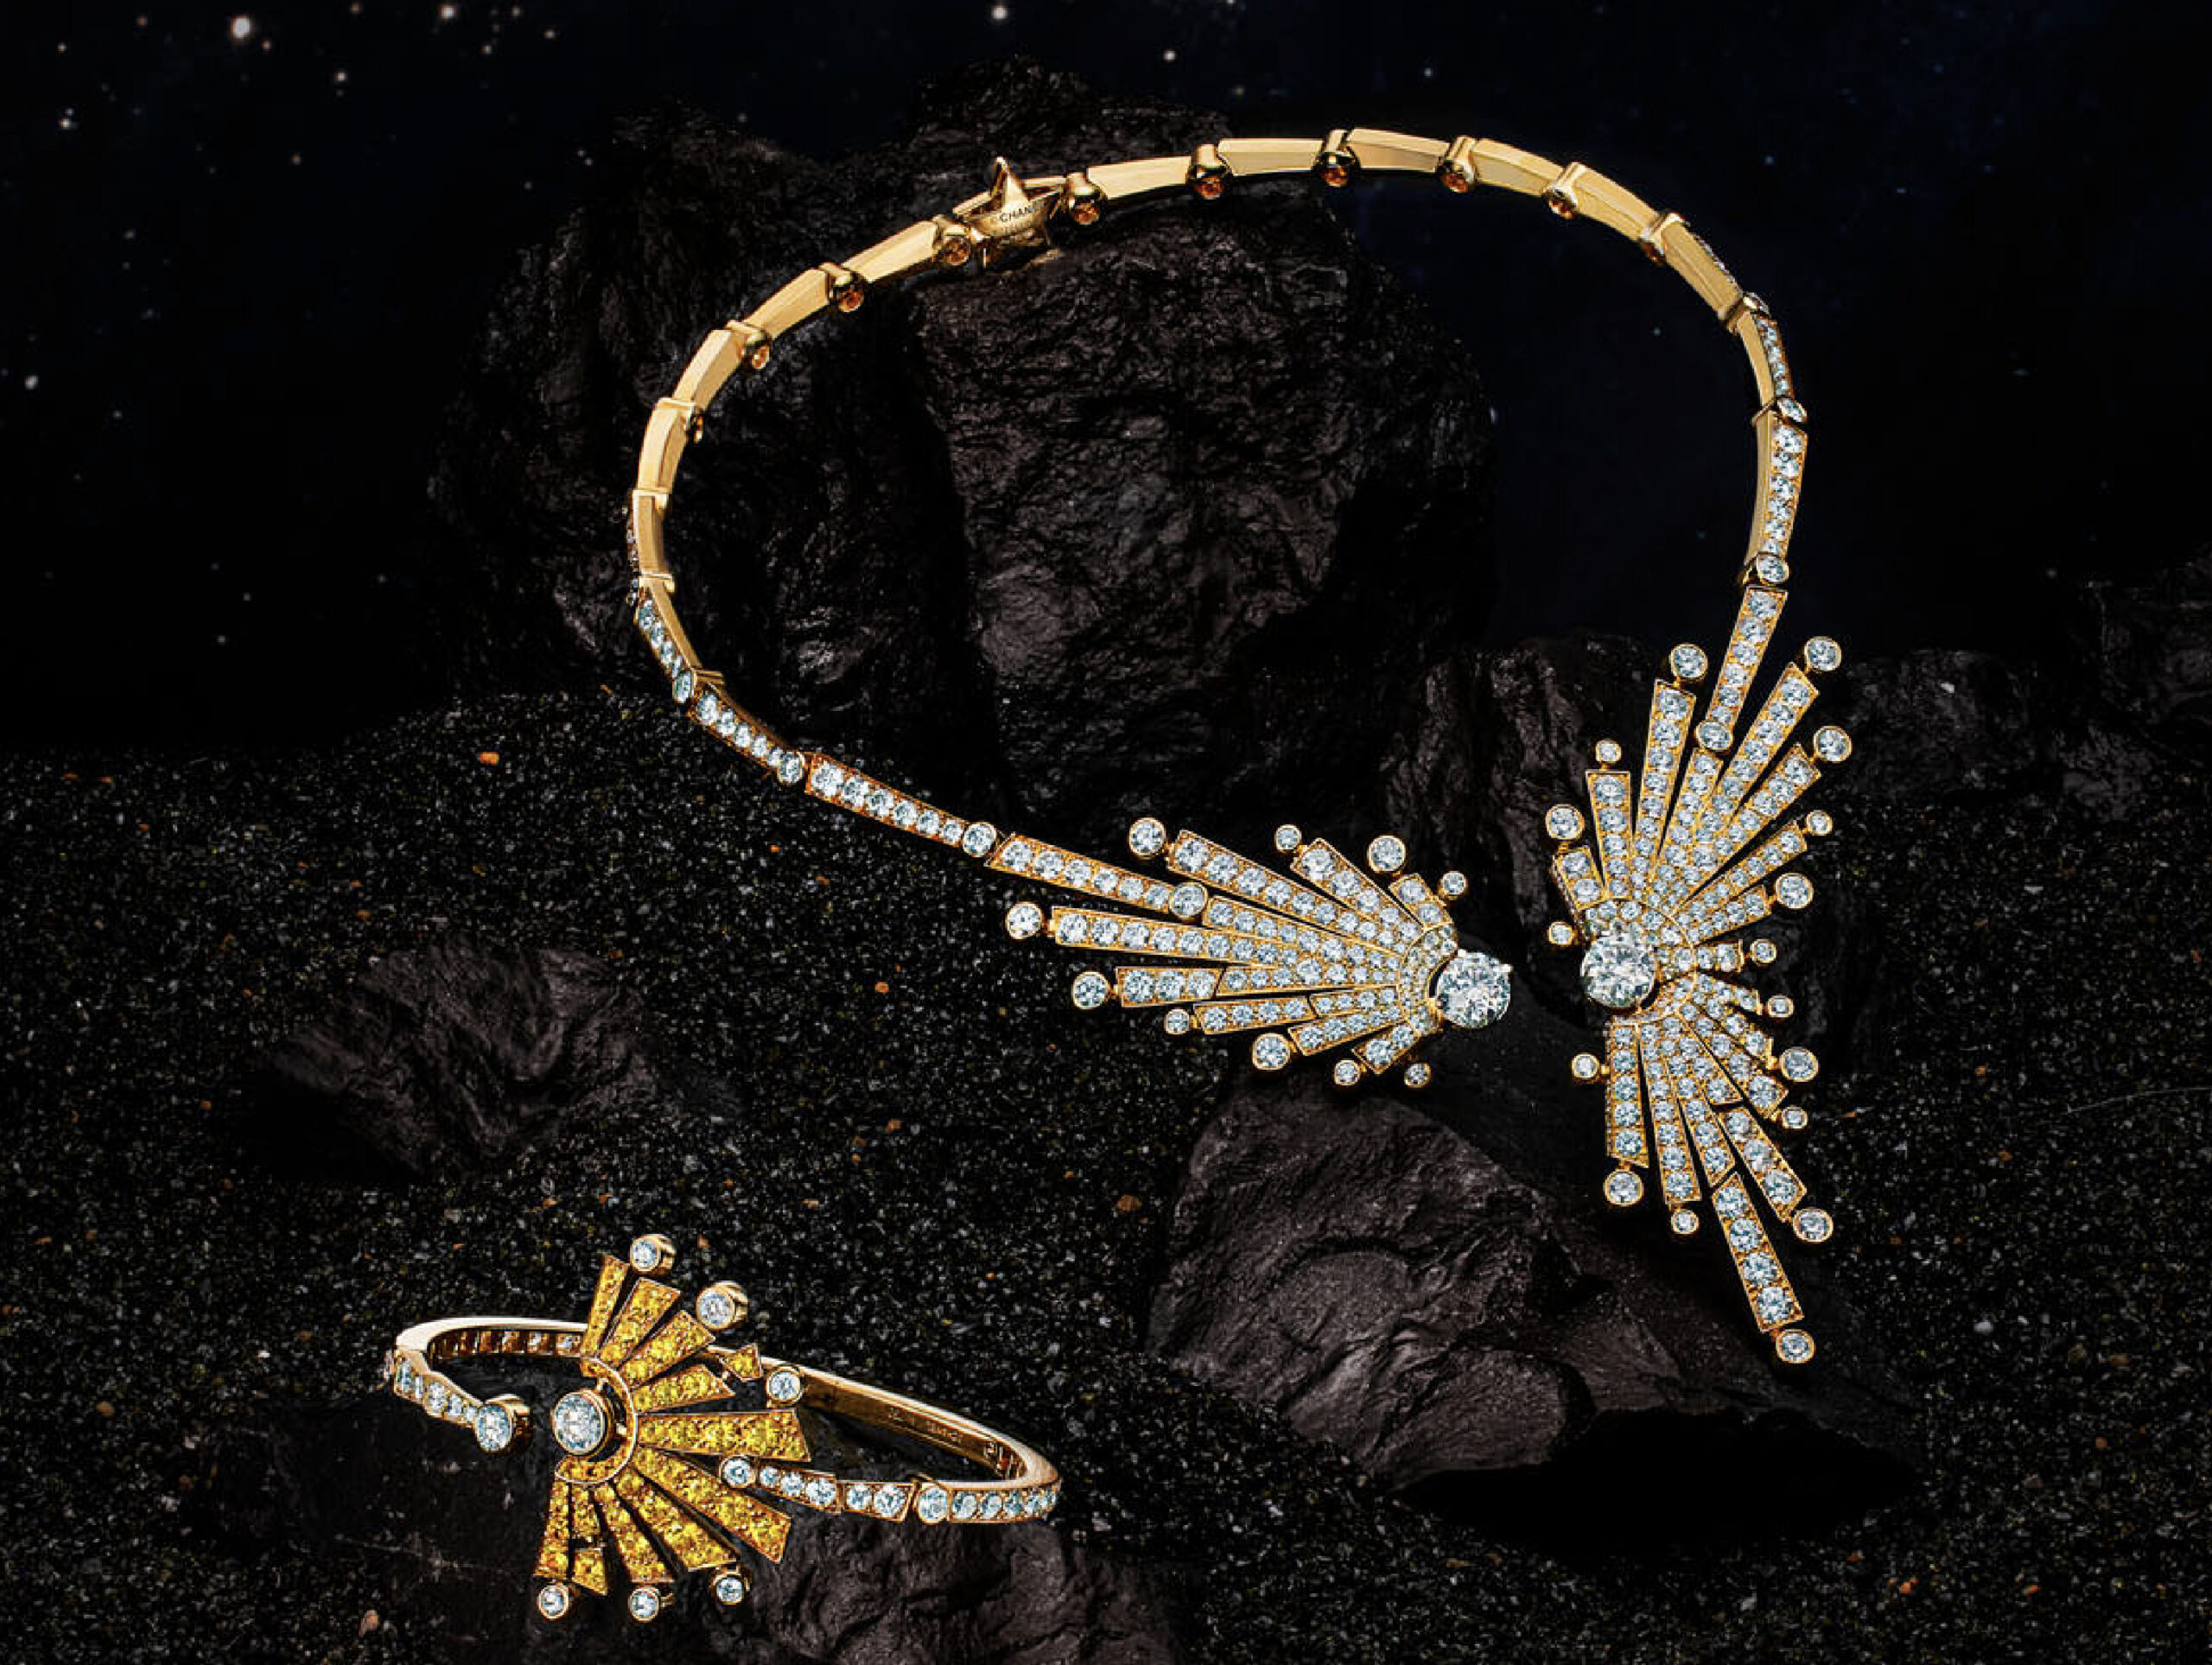 Chanel's 1932 Bijoux de Diamants collection laid on galaxy backdrop